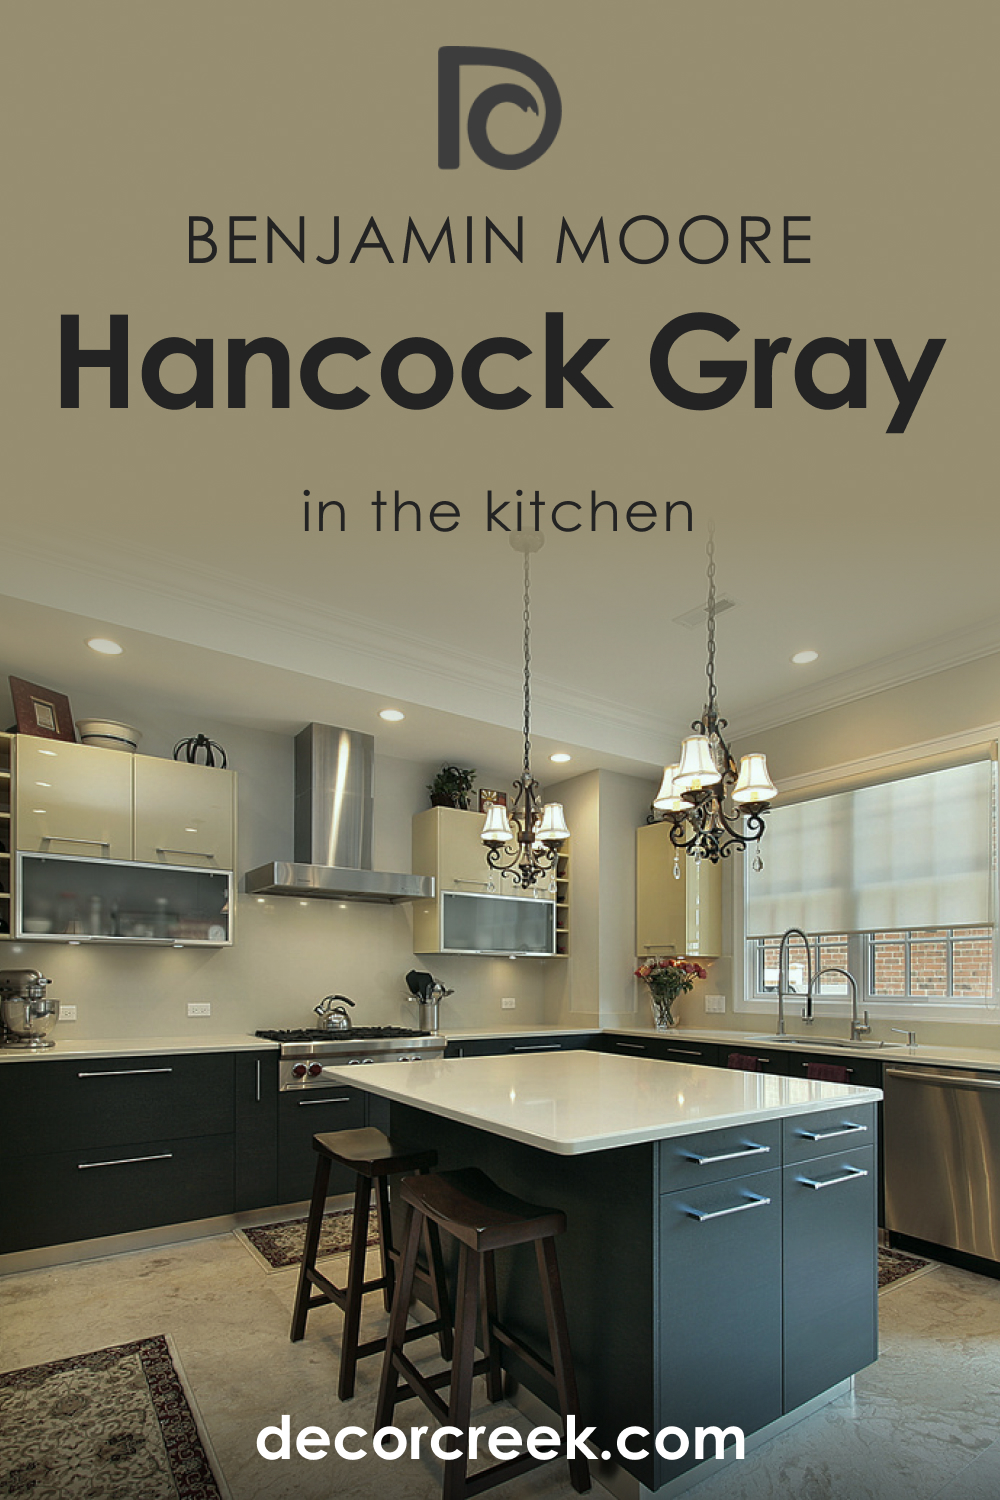 Hancock Gray HC-97 in the Kitchen